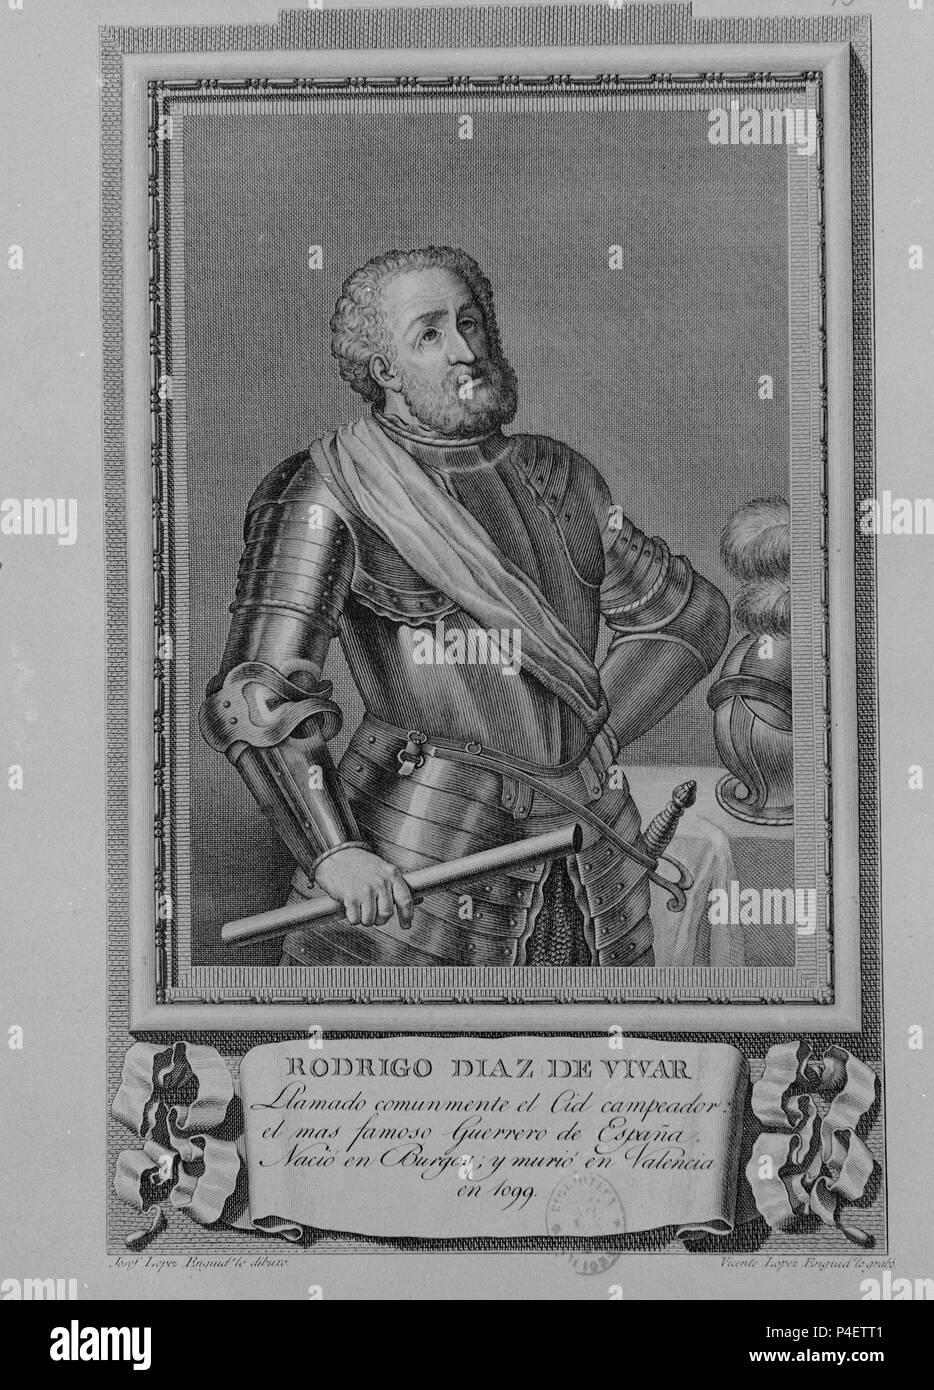 RODRIGO DIAZ DE VIVAR - CID CAMPEADOR - GRABADO SIGLO XVIII - 260x355. Autore: Vicente López Enguídanos (1774-c. 1799). Posizione: Biblioteca Nacional-COLECCION, MADRID, Spagna. Foto Stock